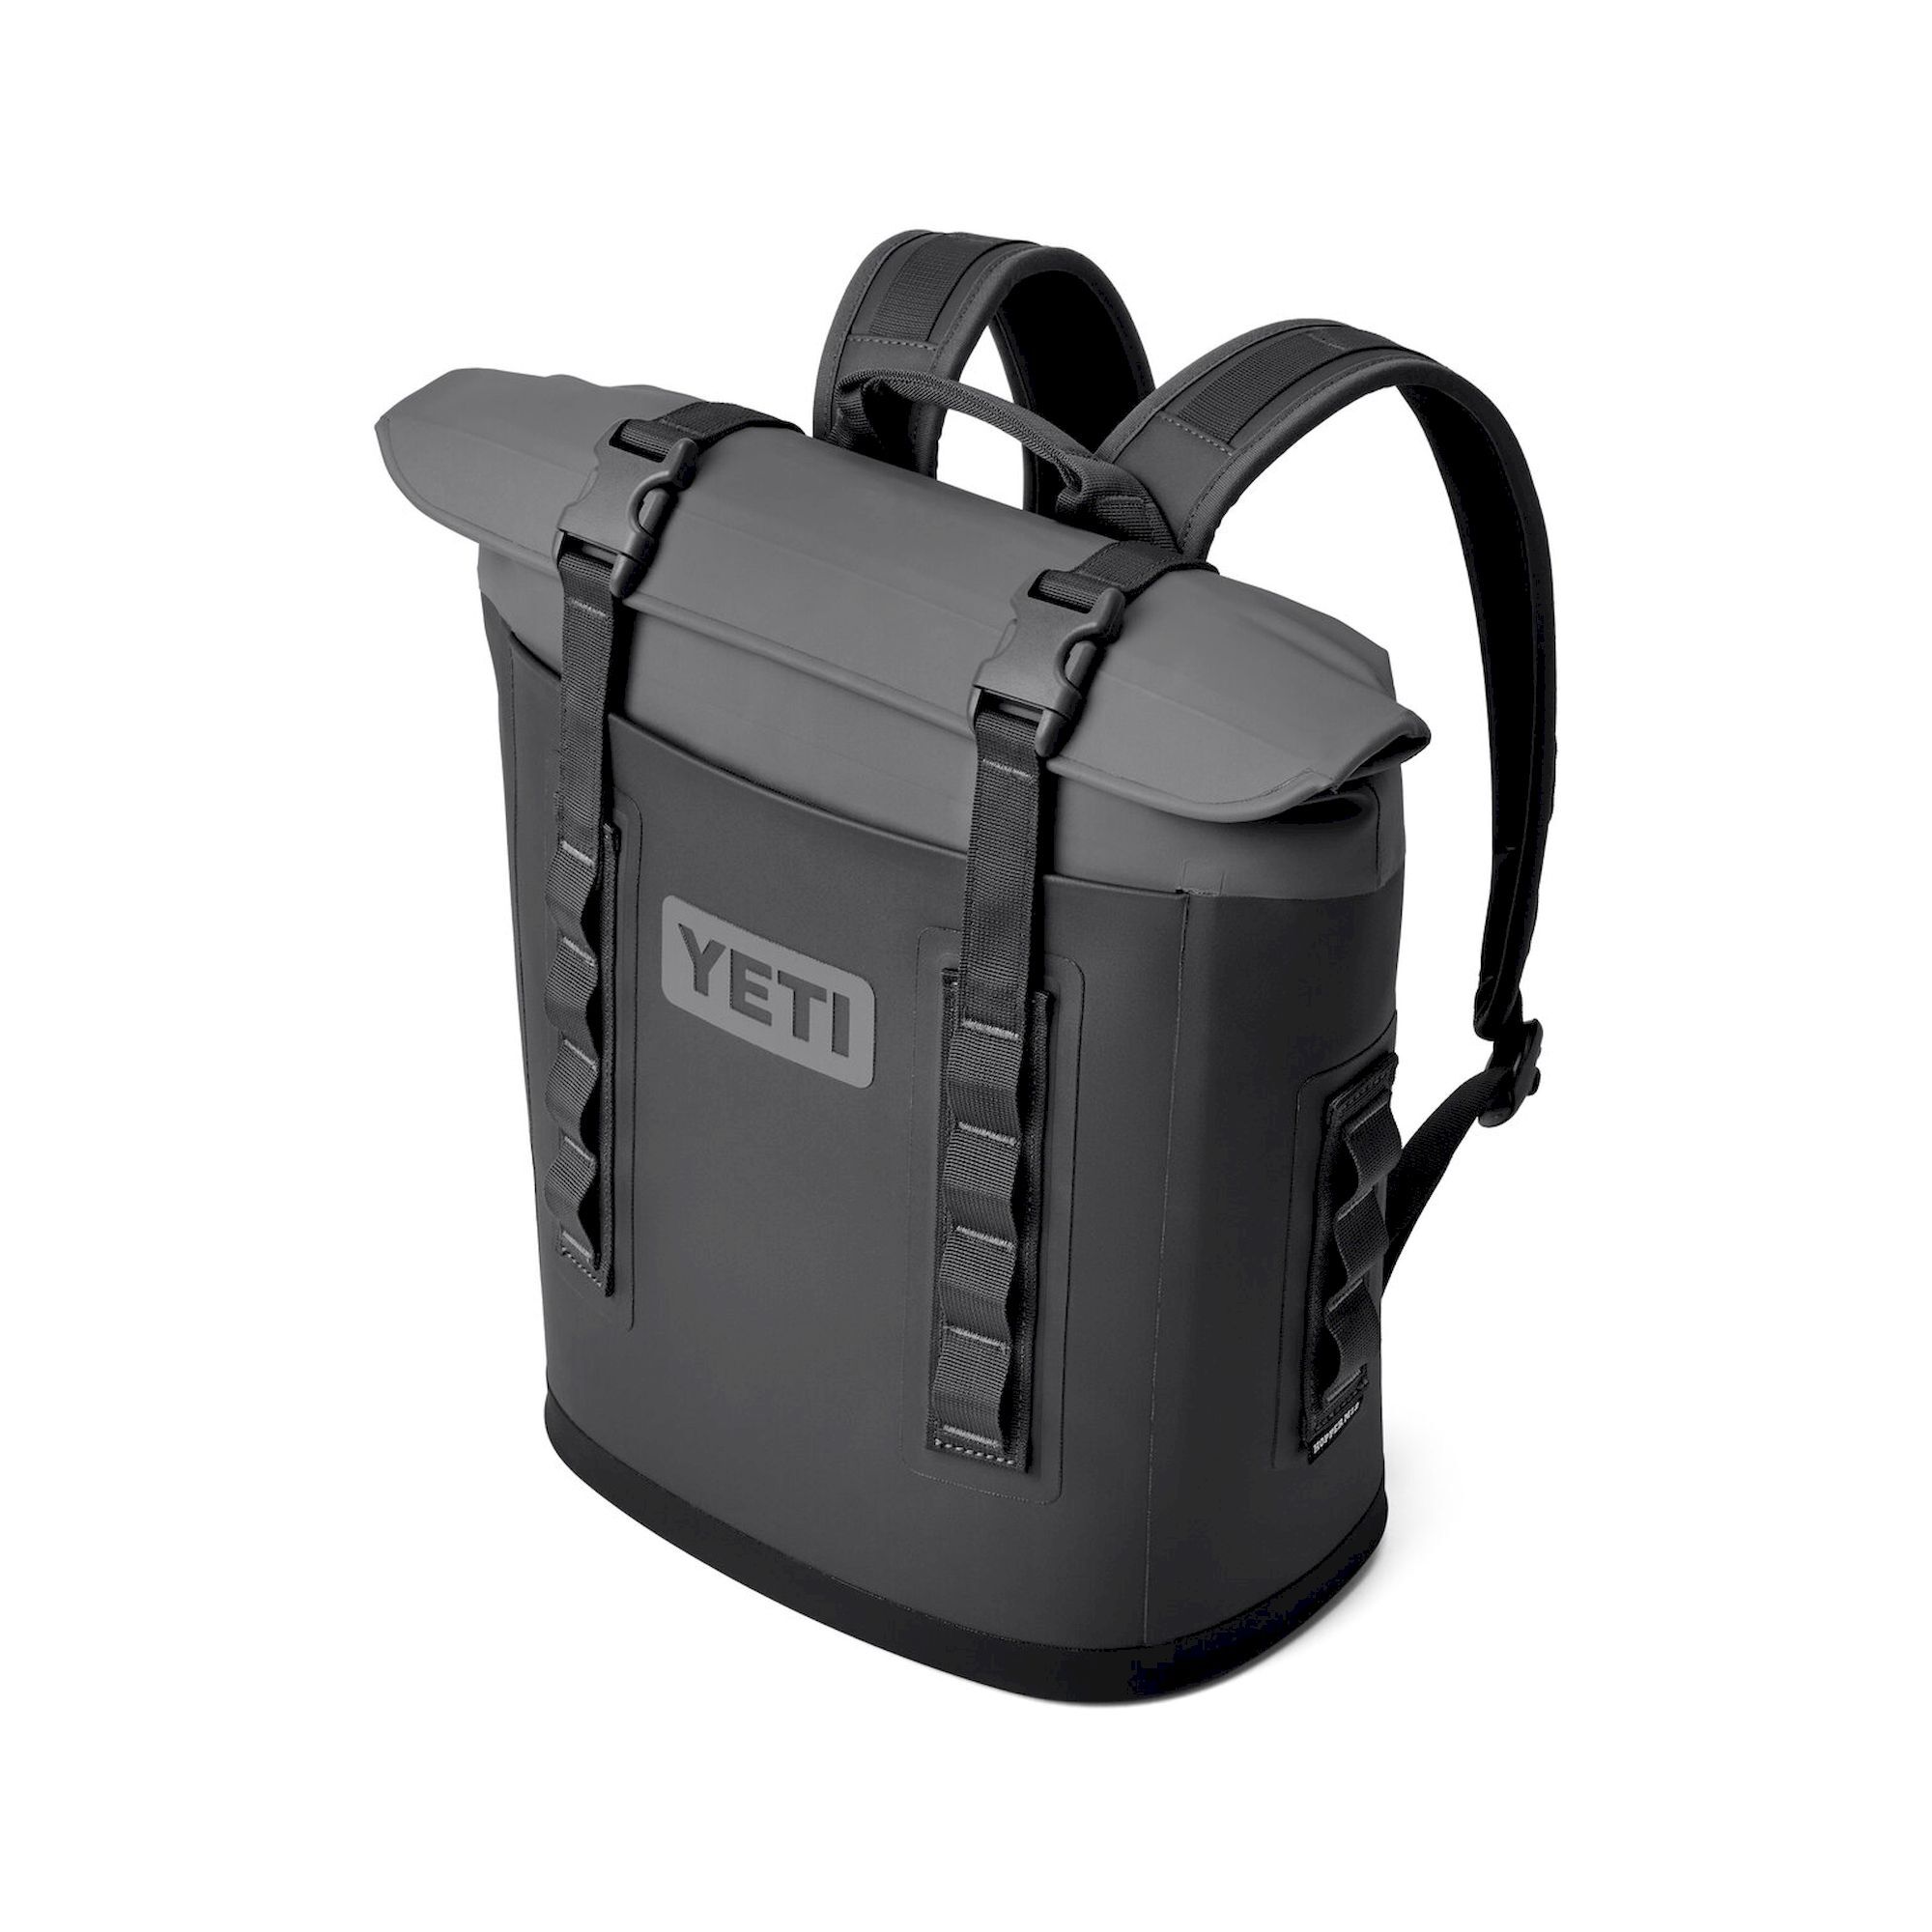 Yeti Hopper Soft Backpack Cooler - Frigorifero portatile | Hardloop